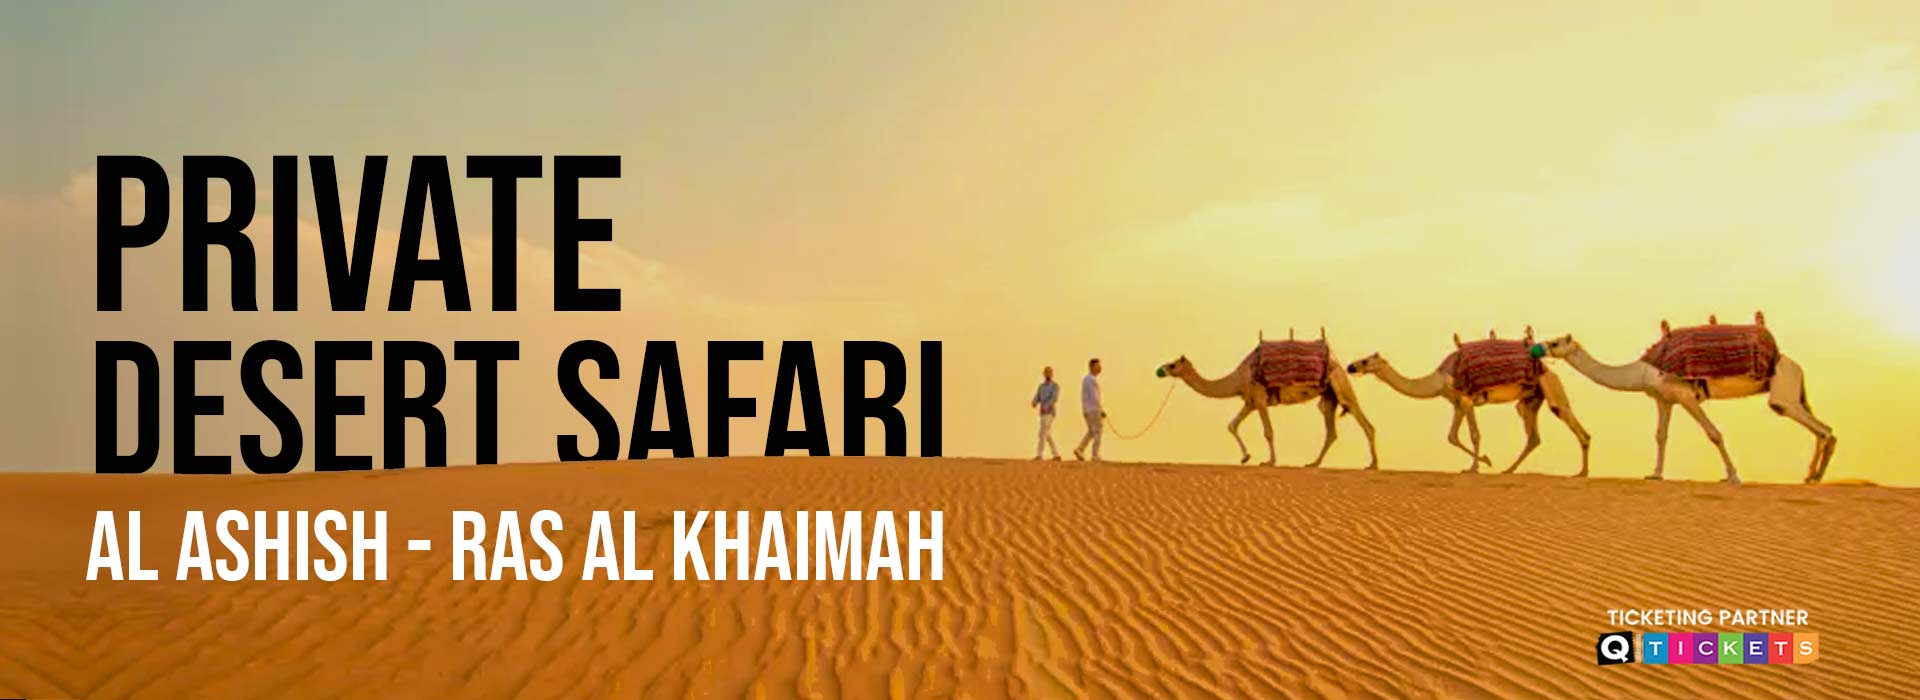 Private Desert Safari | Just Dubai